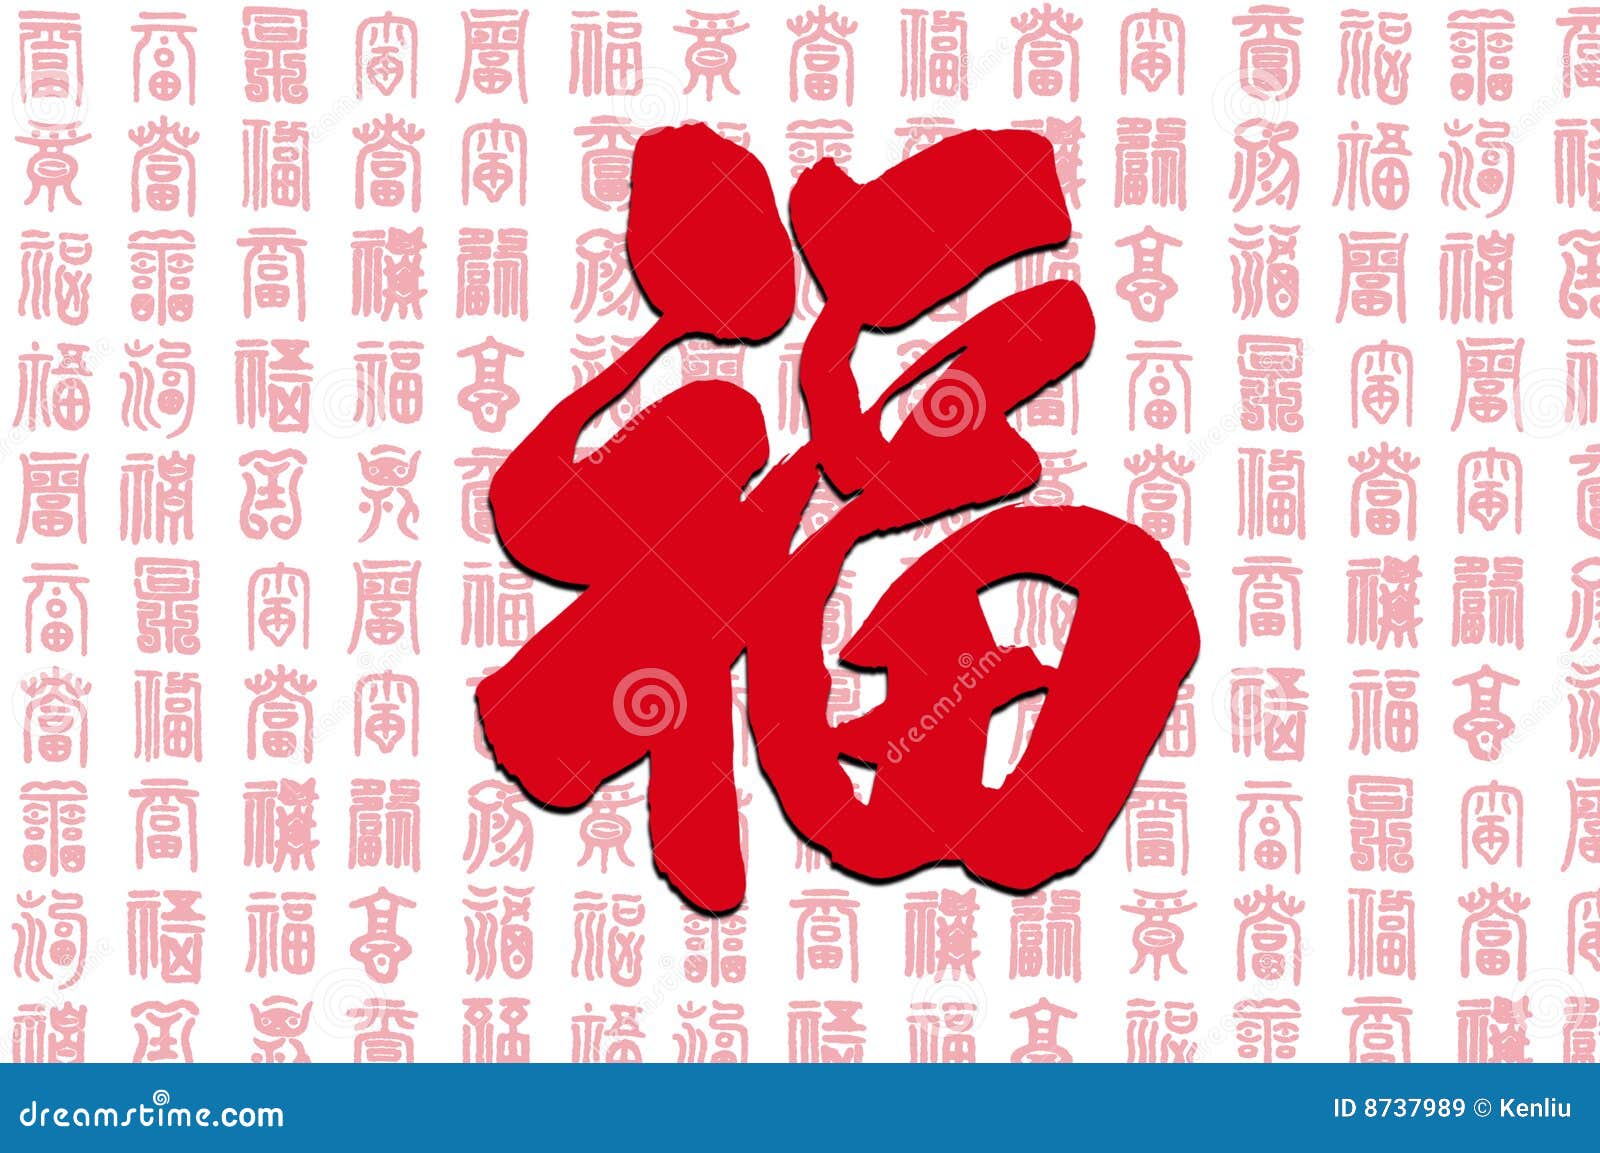 Fu-Chinese Word Write by Brush Pen. Stock Illustration